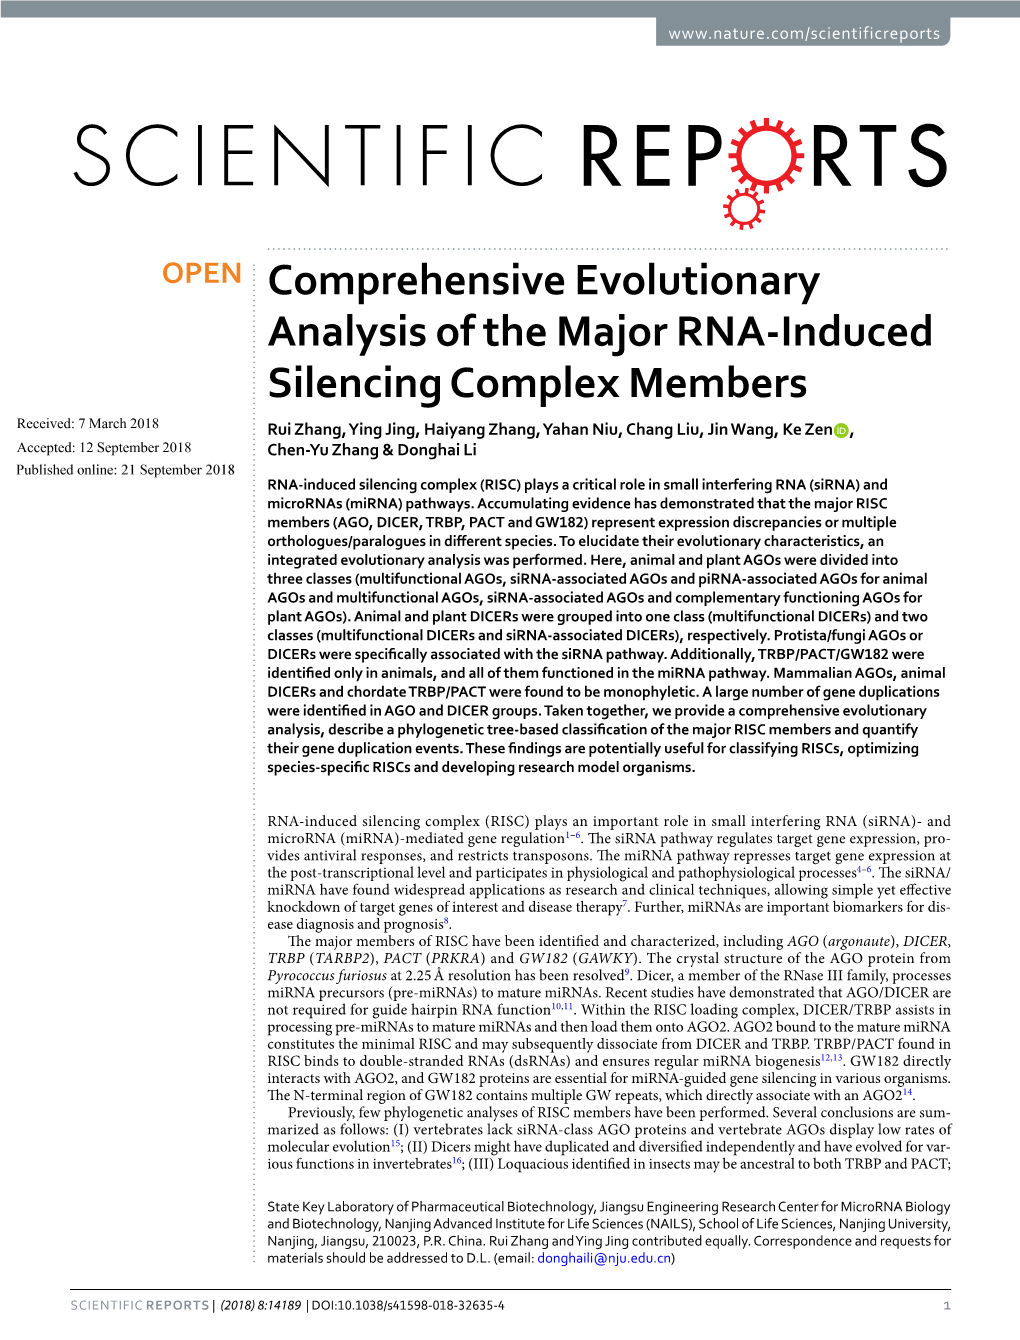 Comprehensive Evolutionary Analysis of the Major RNA-Induced